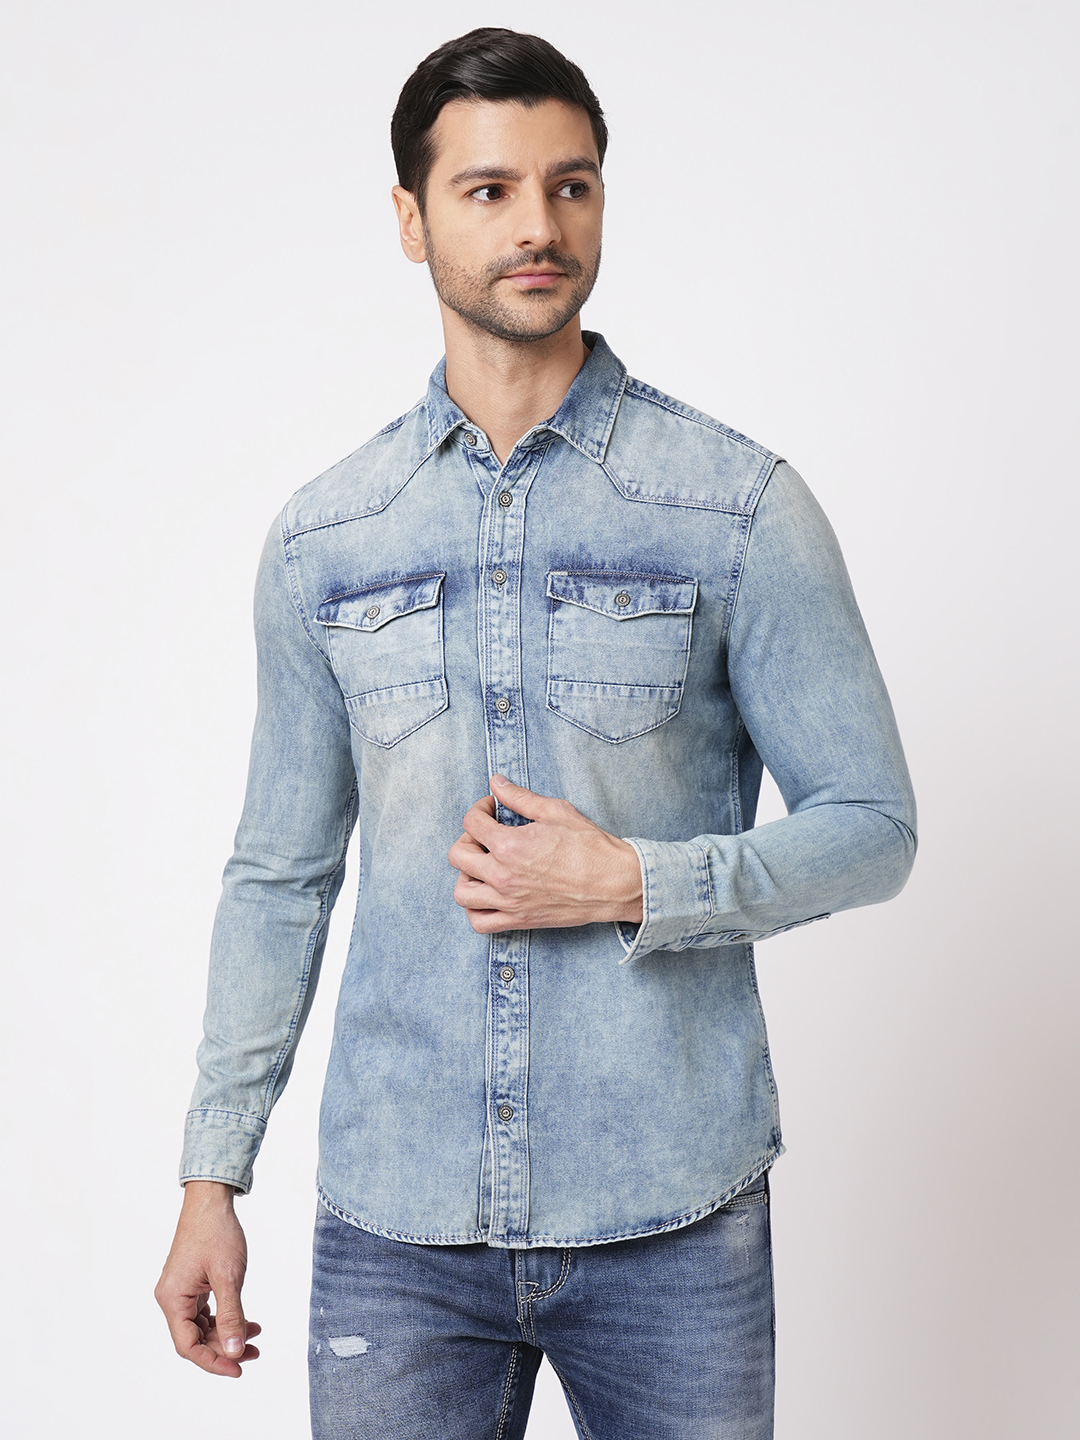 mens cloth online shopping - urban clothing co.